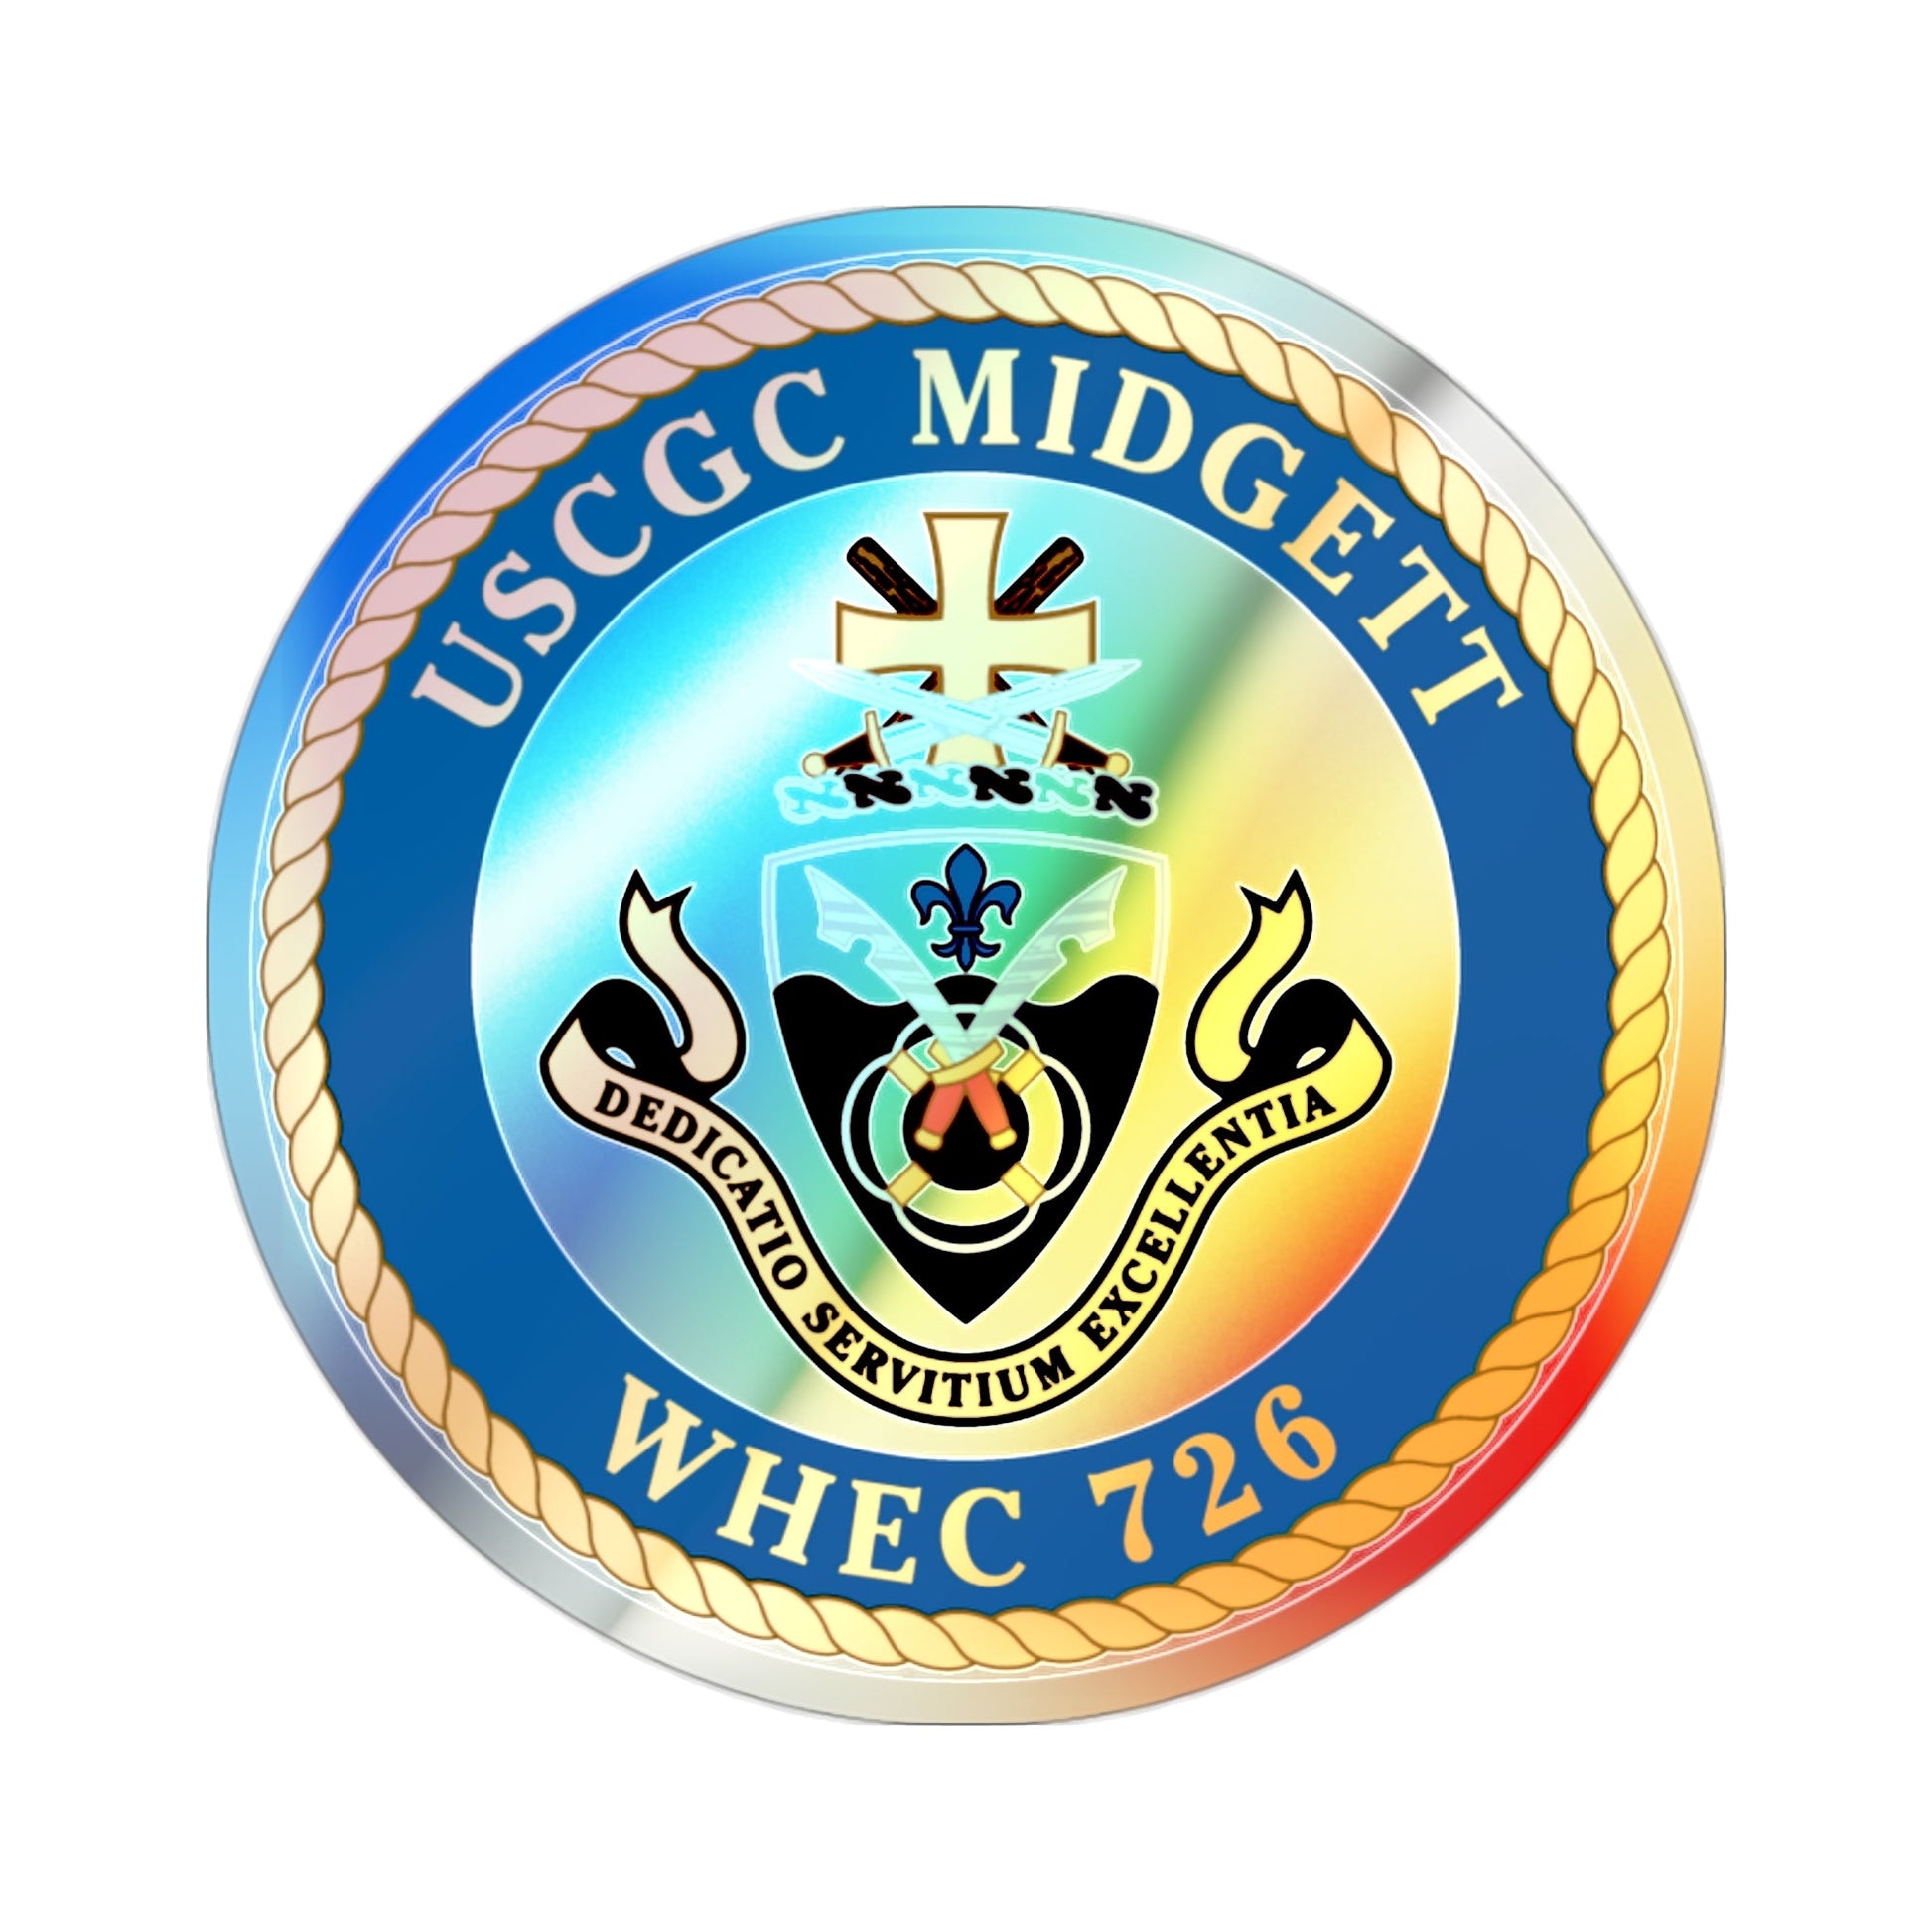 USCG Midgett WHEC 726 (U.S. Coast Guard) Holographic STICKER Die-Cut Vinyl Decal-2 Inch-The Sticker Space